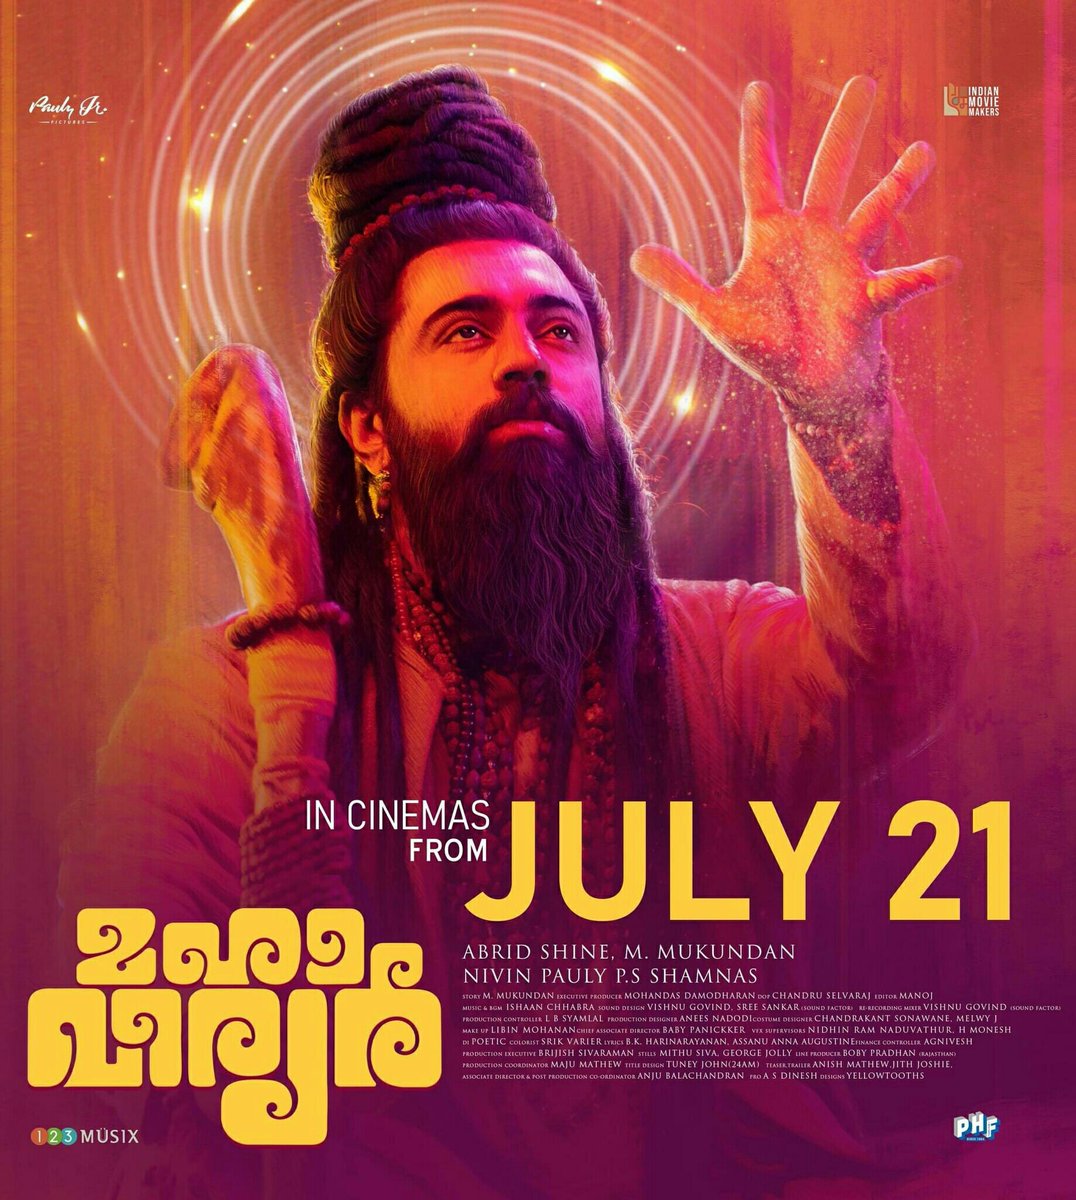 #NivinPauly - #AbridShine's Time Traveller Film #Mahaveeeyar Releasing Around 350+ Screens Tomorrow All Over Kerala...

Costars #AsifAli #ShanviSrivastav #Lal #LaluAlex...
#MahaveeryarOnJuly21